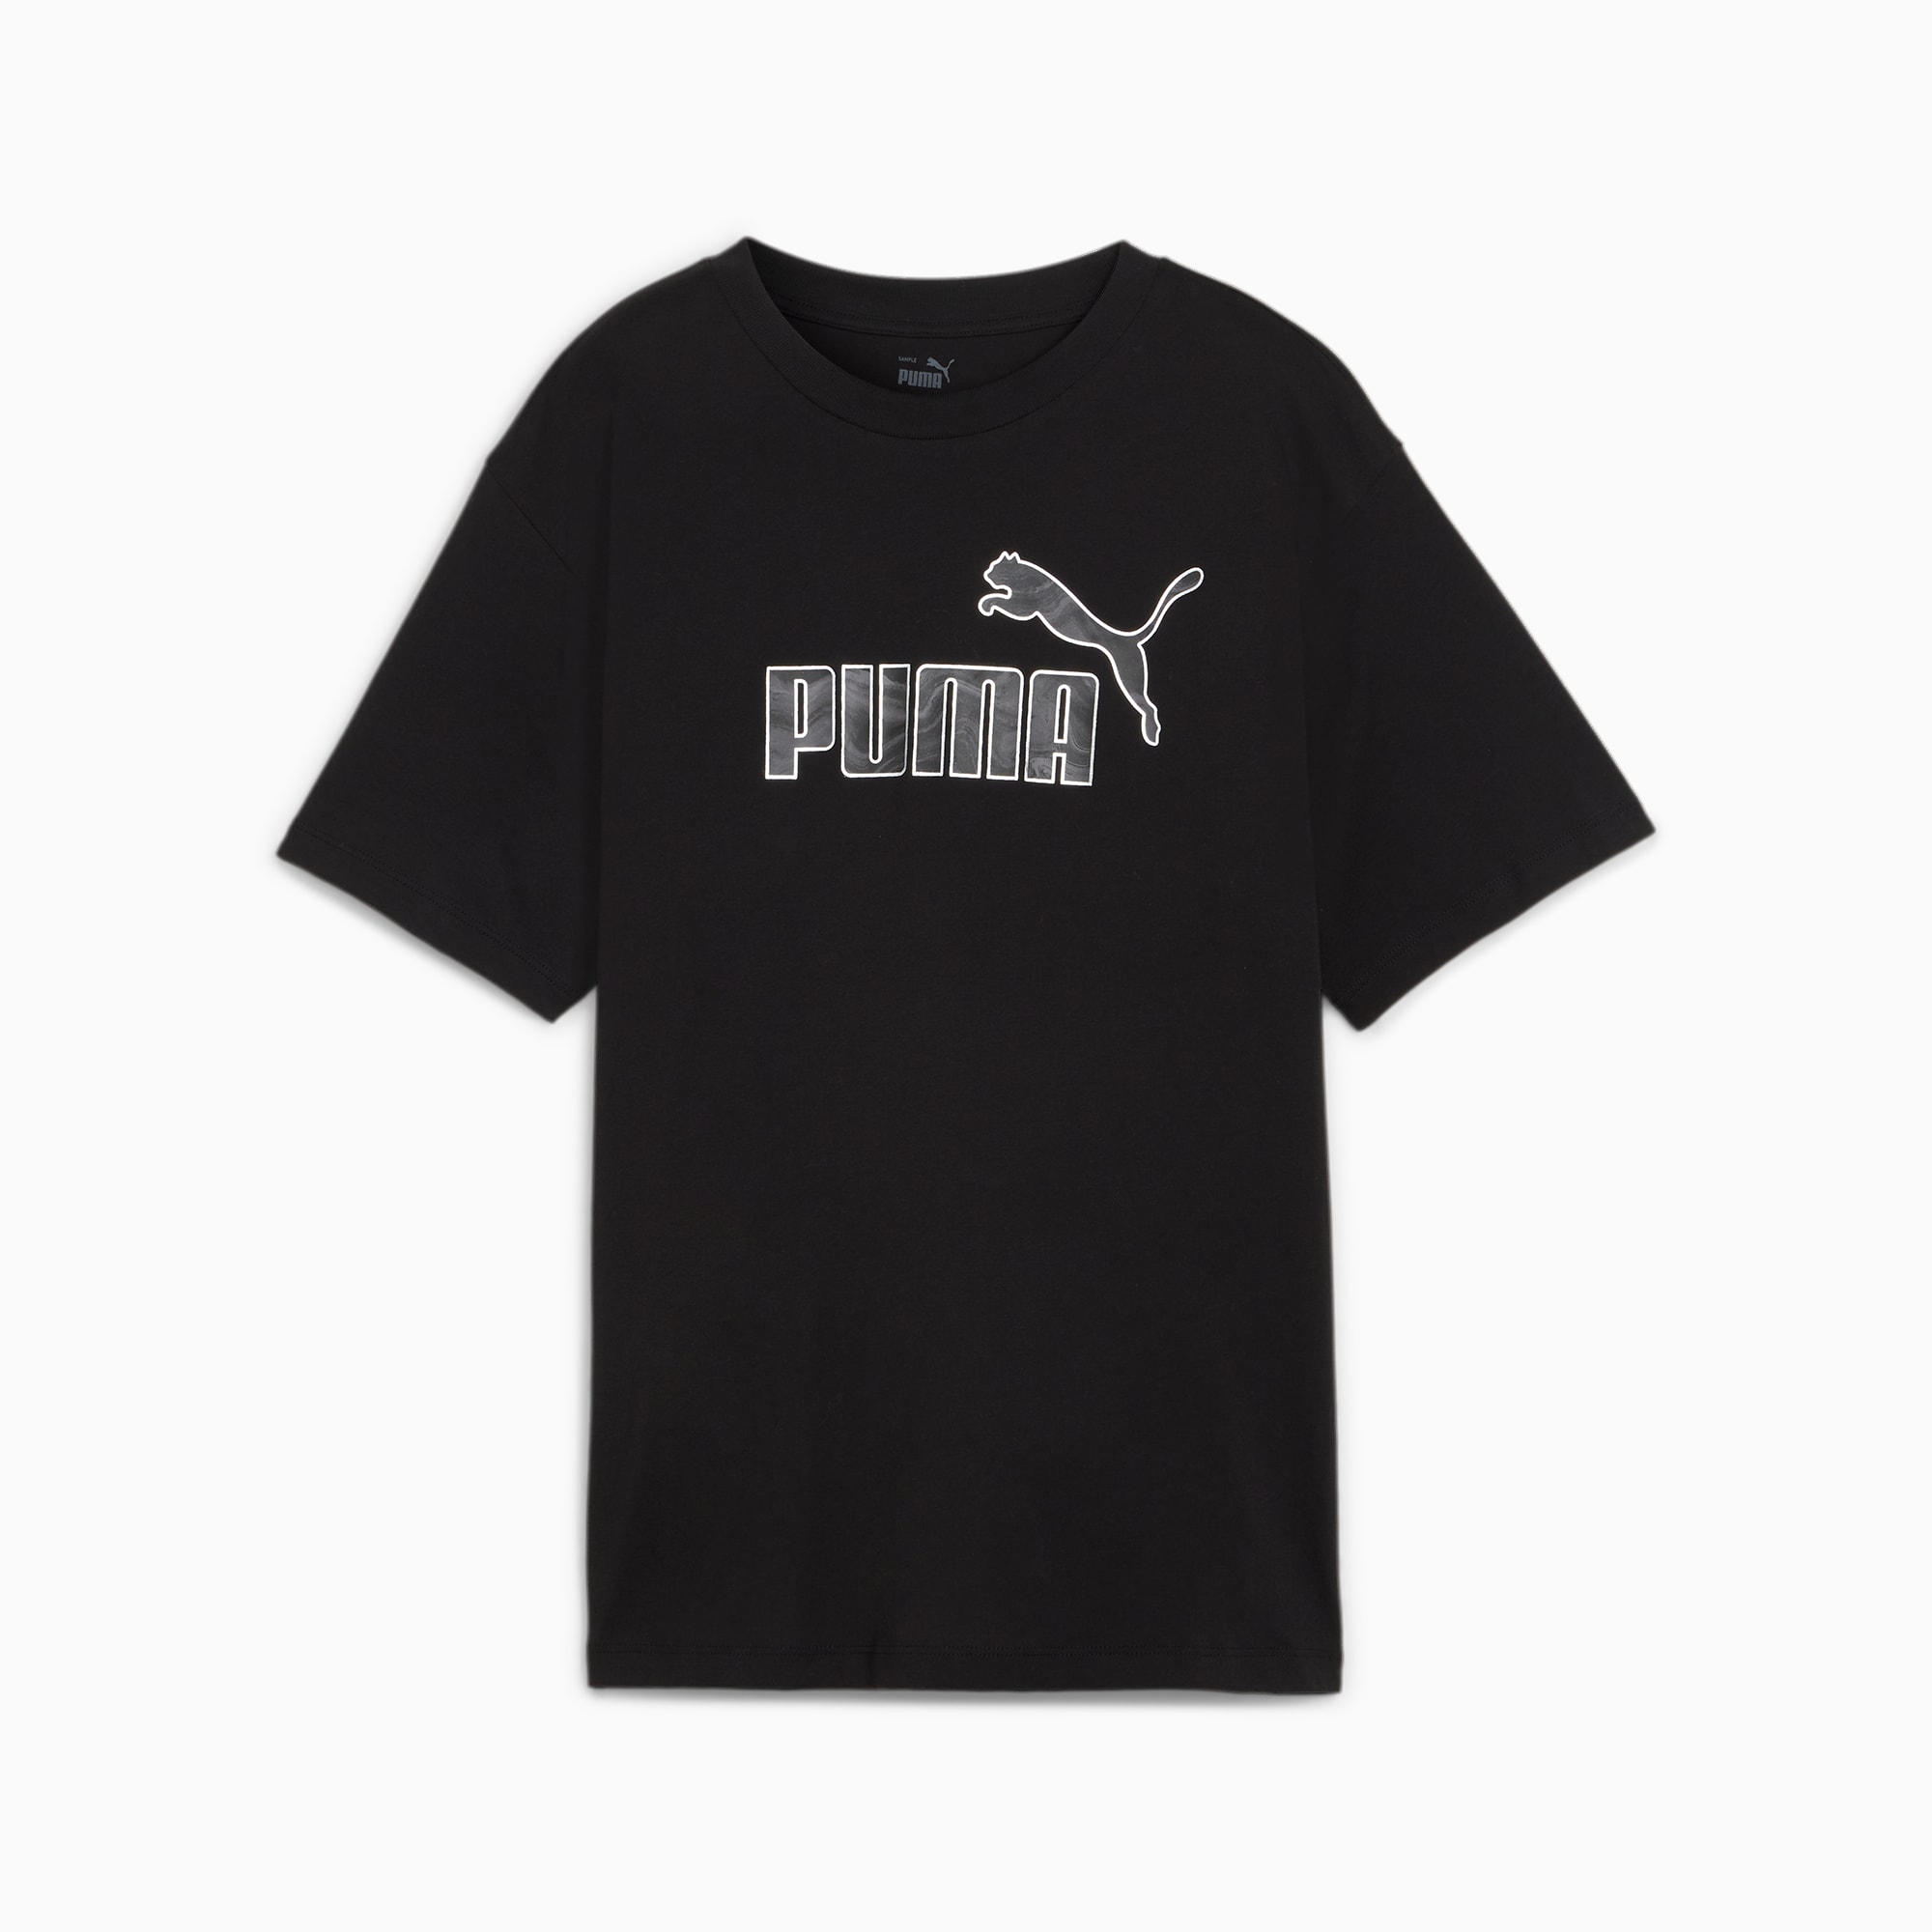 PUMA Ess+ Marbleized Women's Relaxed T-Shirt, Black, Size XL, Clothing